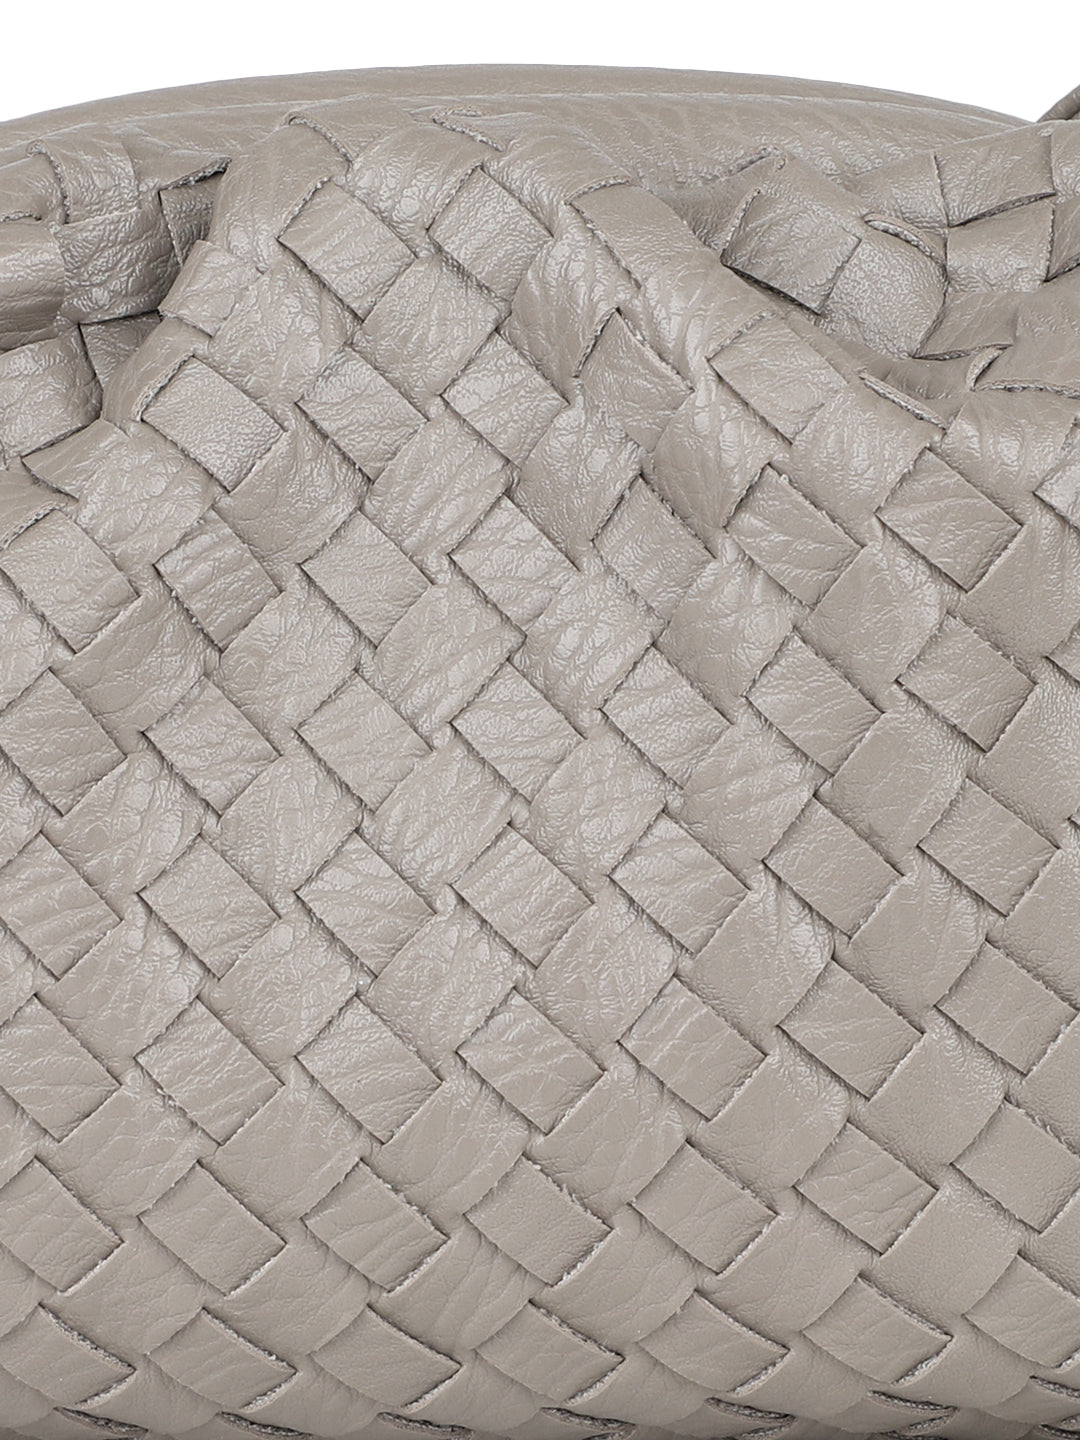 Women Grey Textured Design Solid Sling Bag